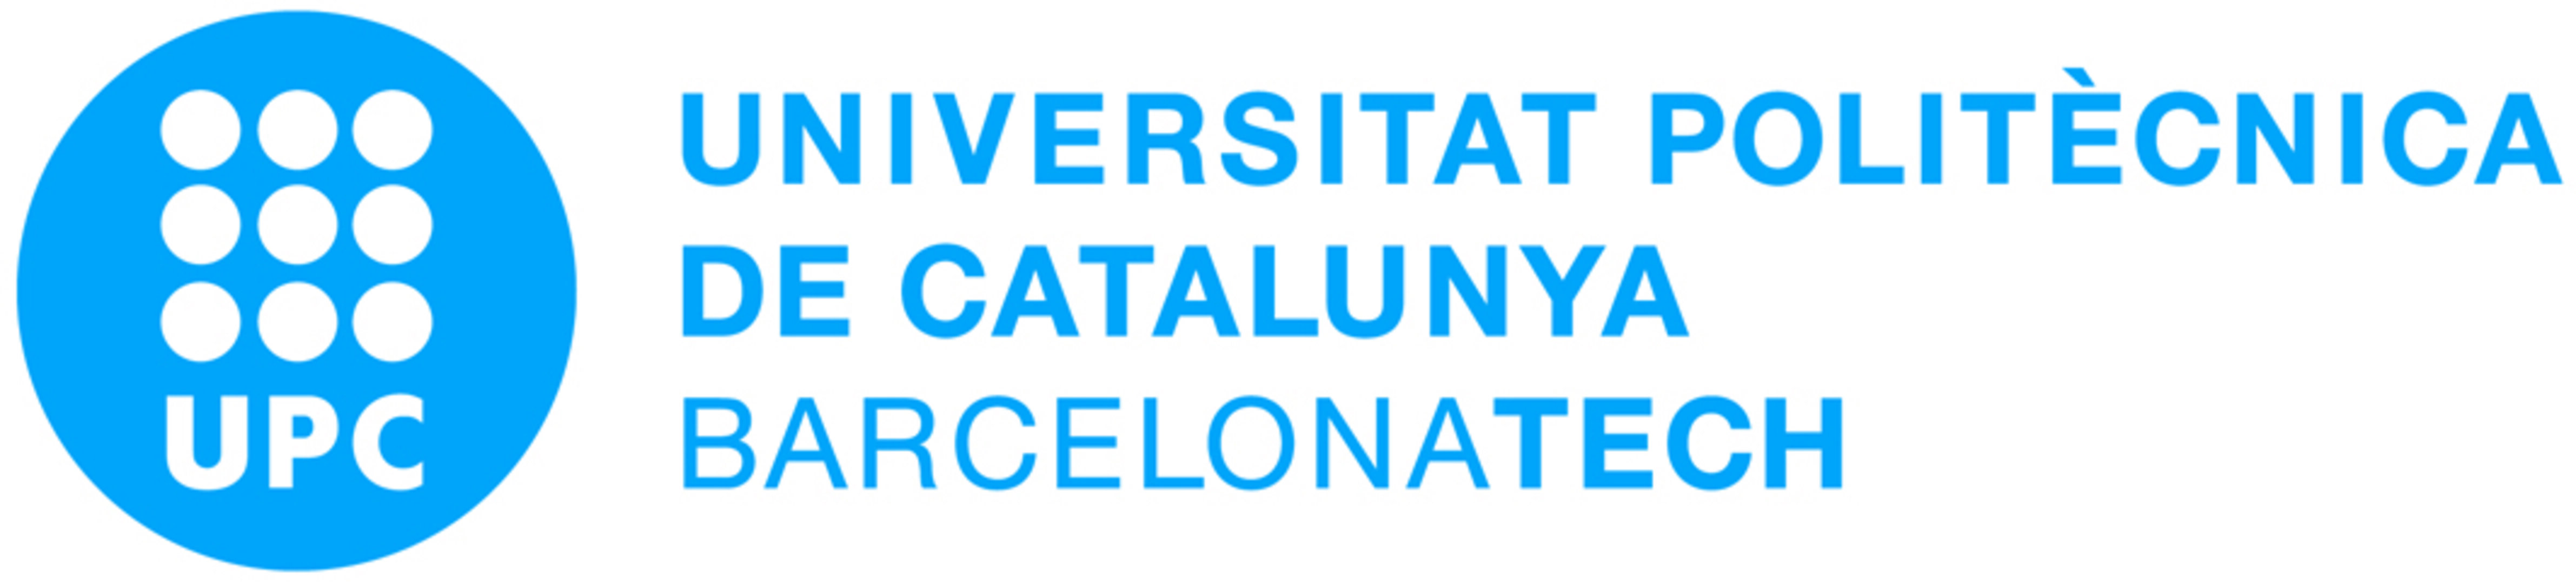 Polytechnic University of Catalonia logo